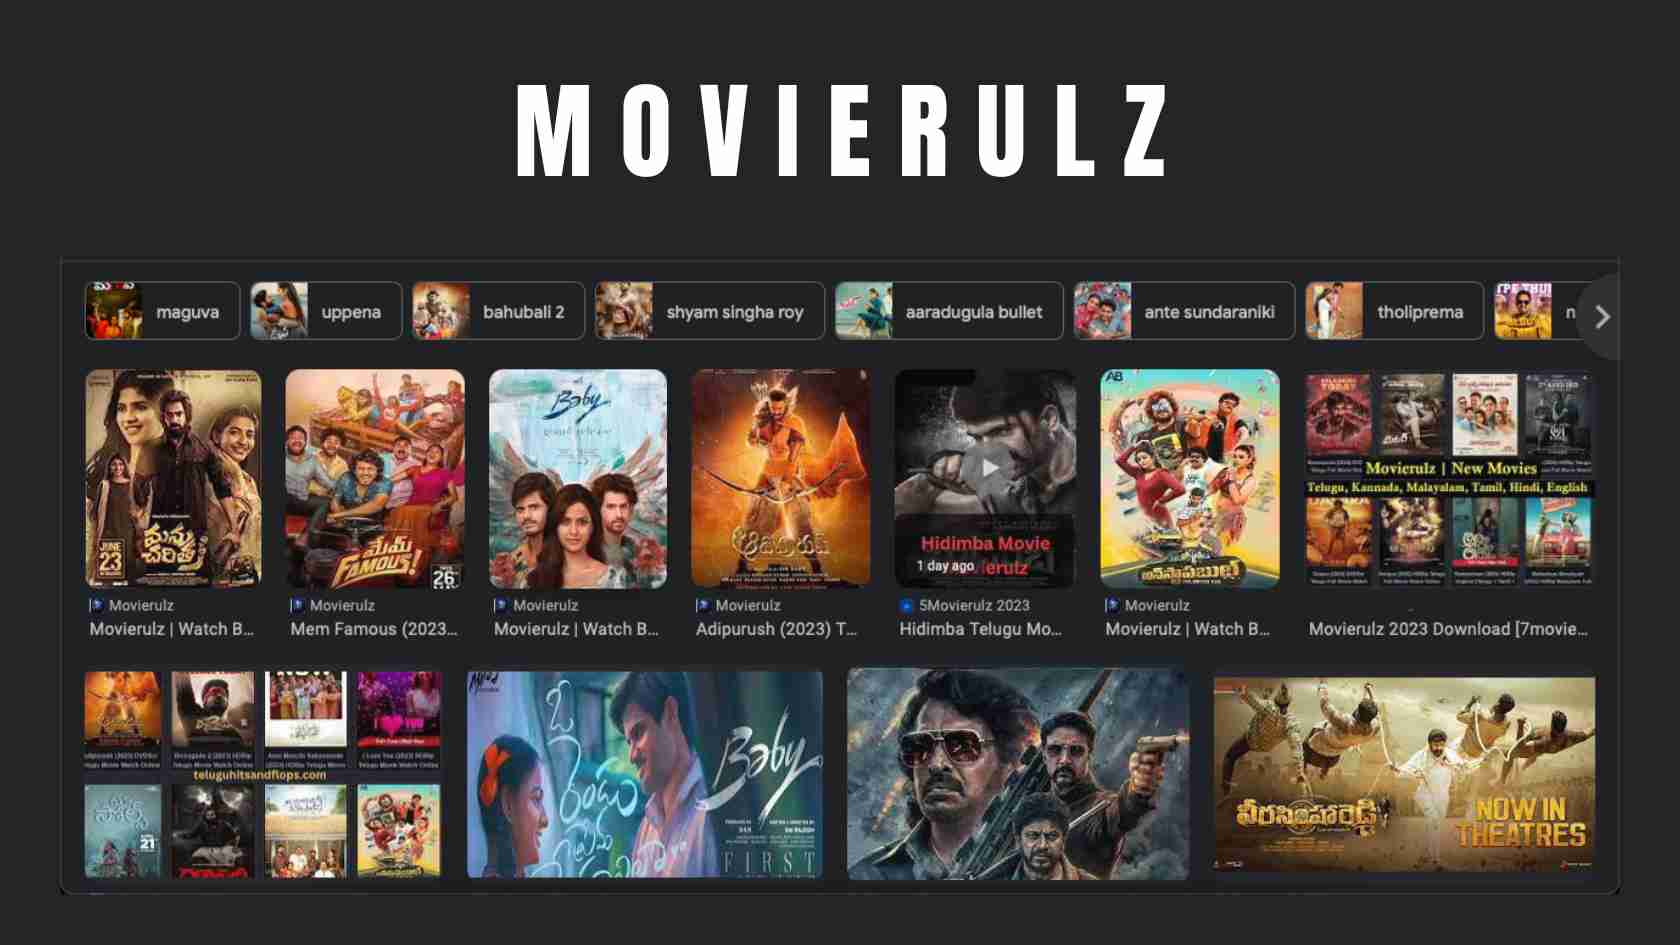 Movierulz UI: Revolutionizing Online Movie Streaming